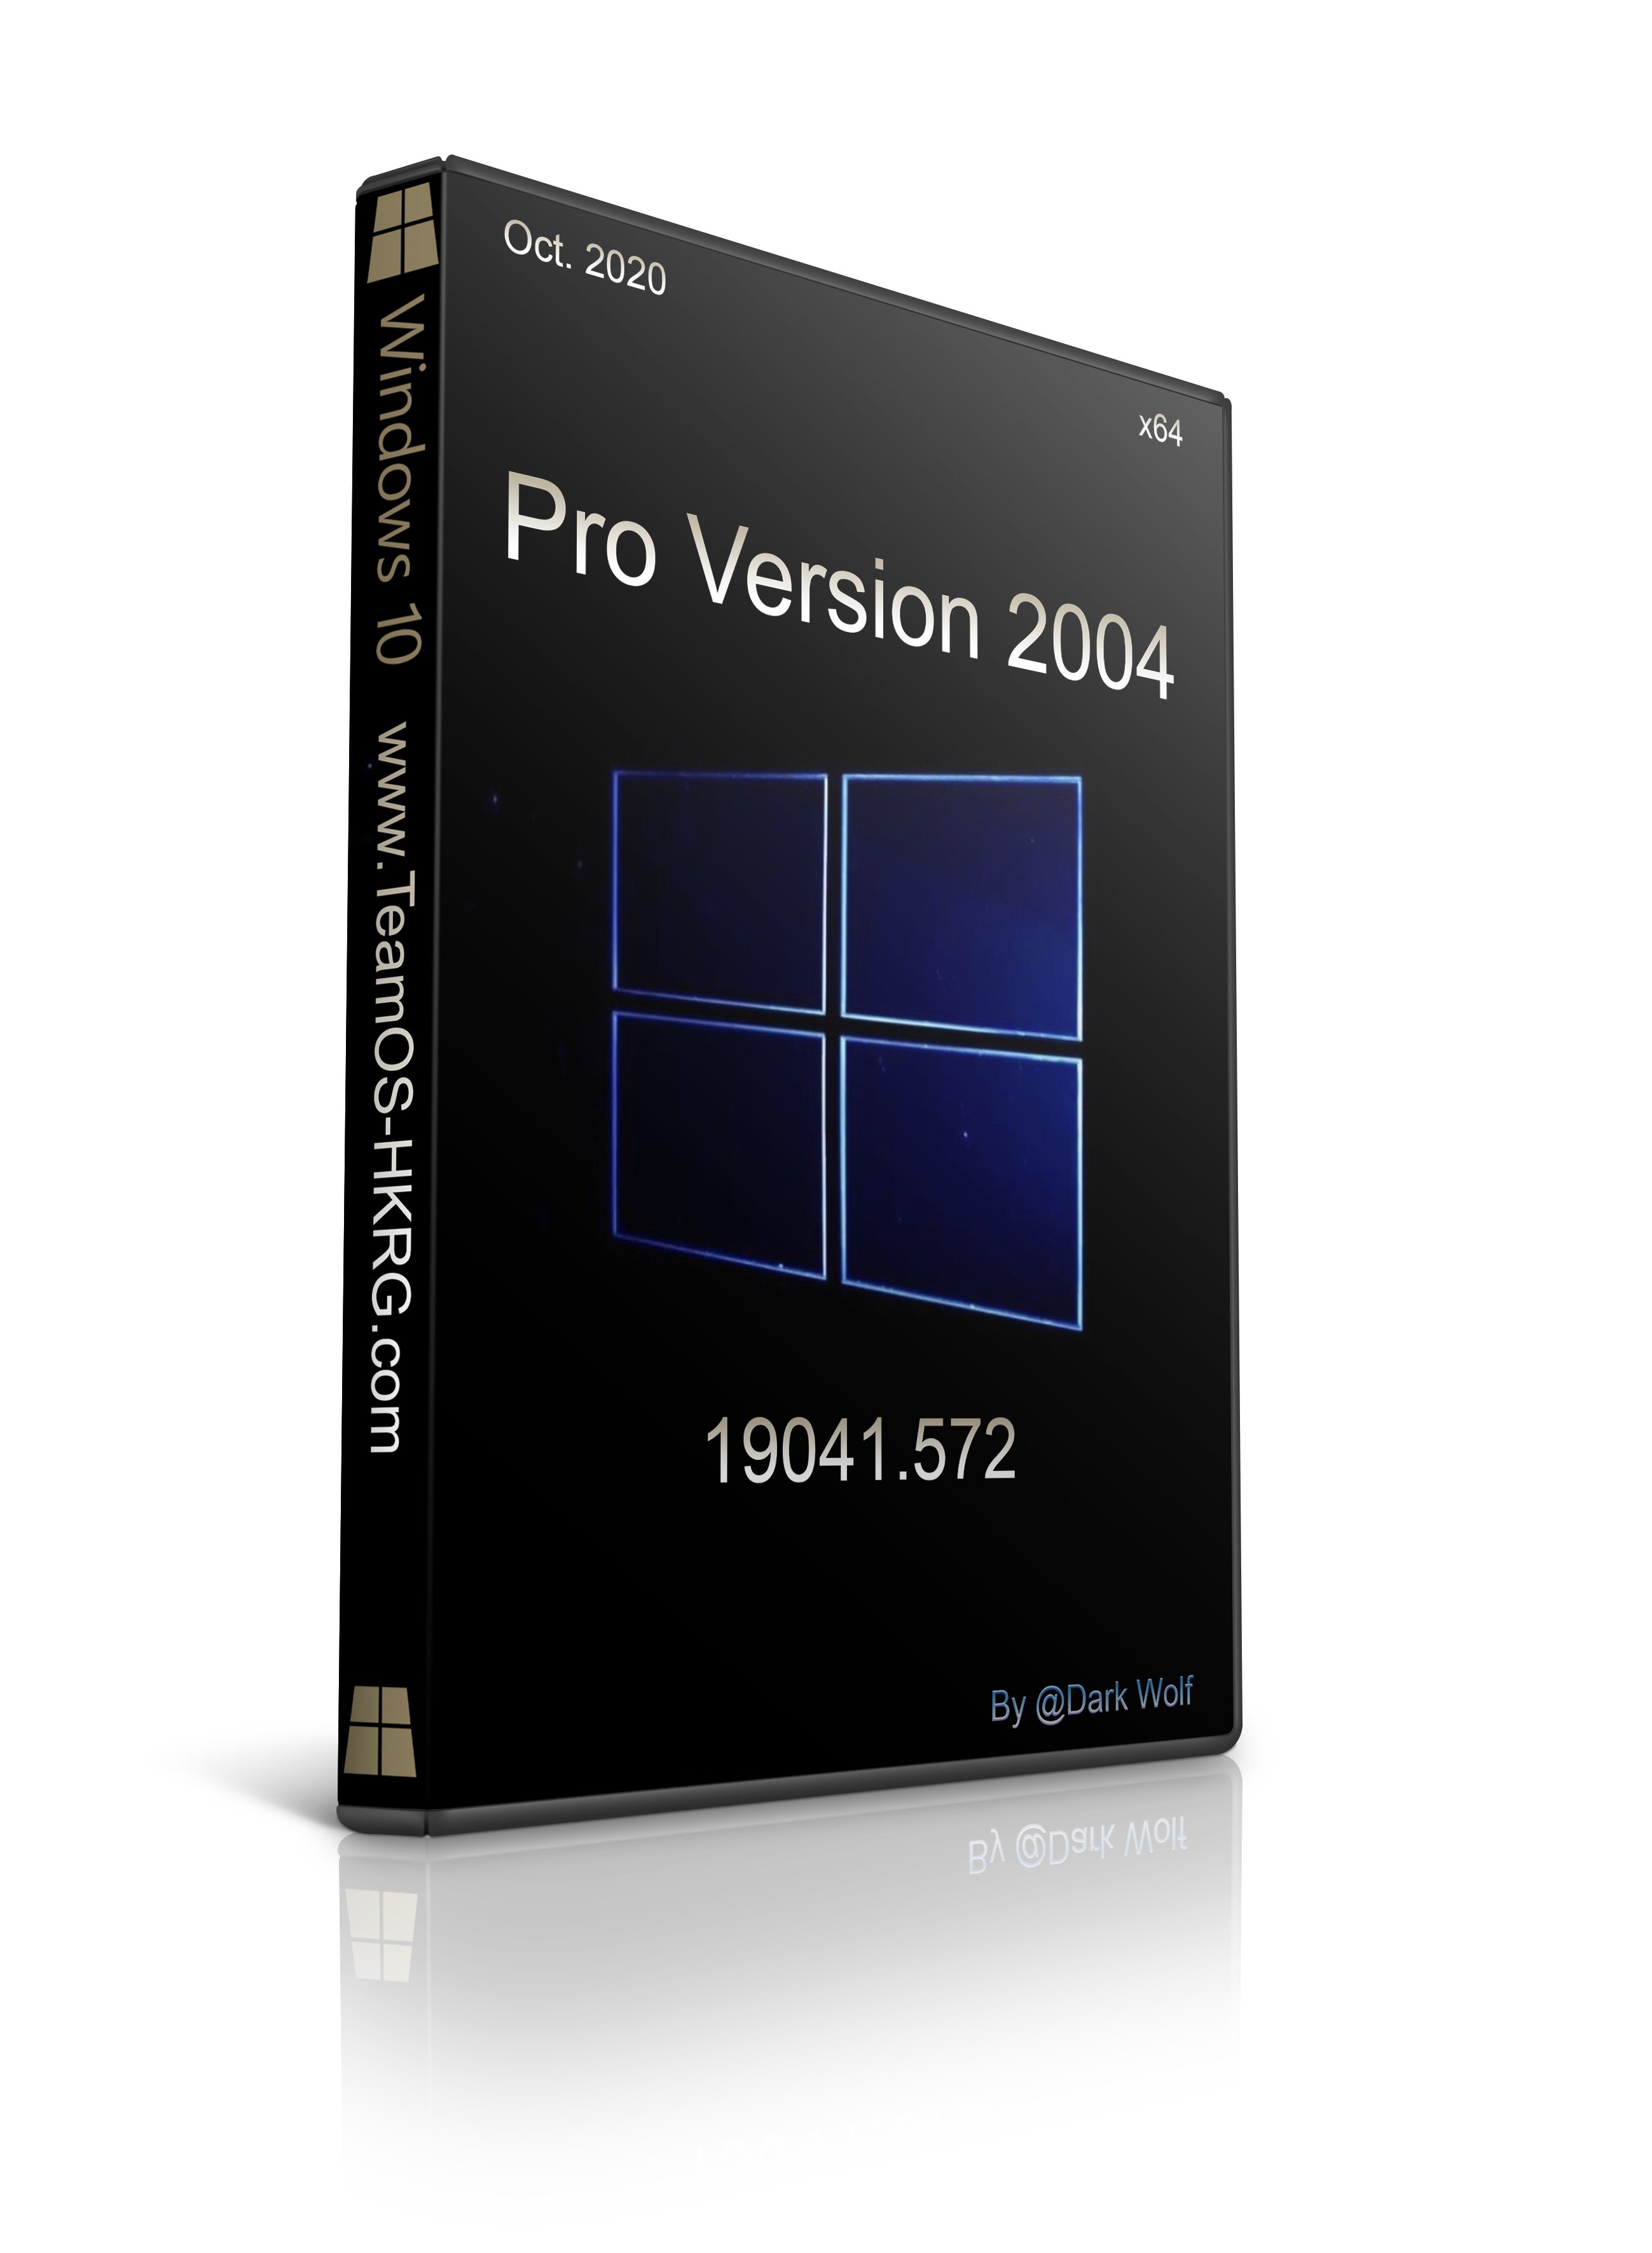 download windows 10 pro version 2004